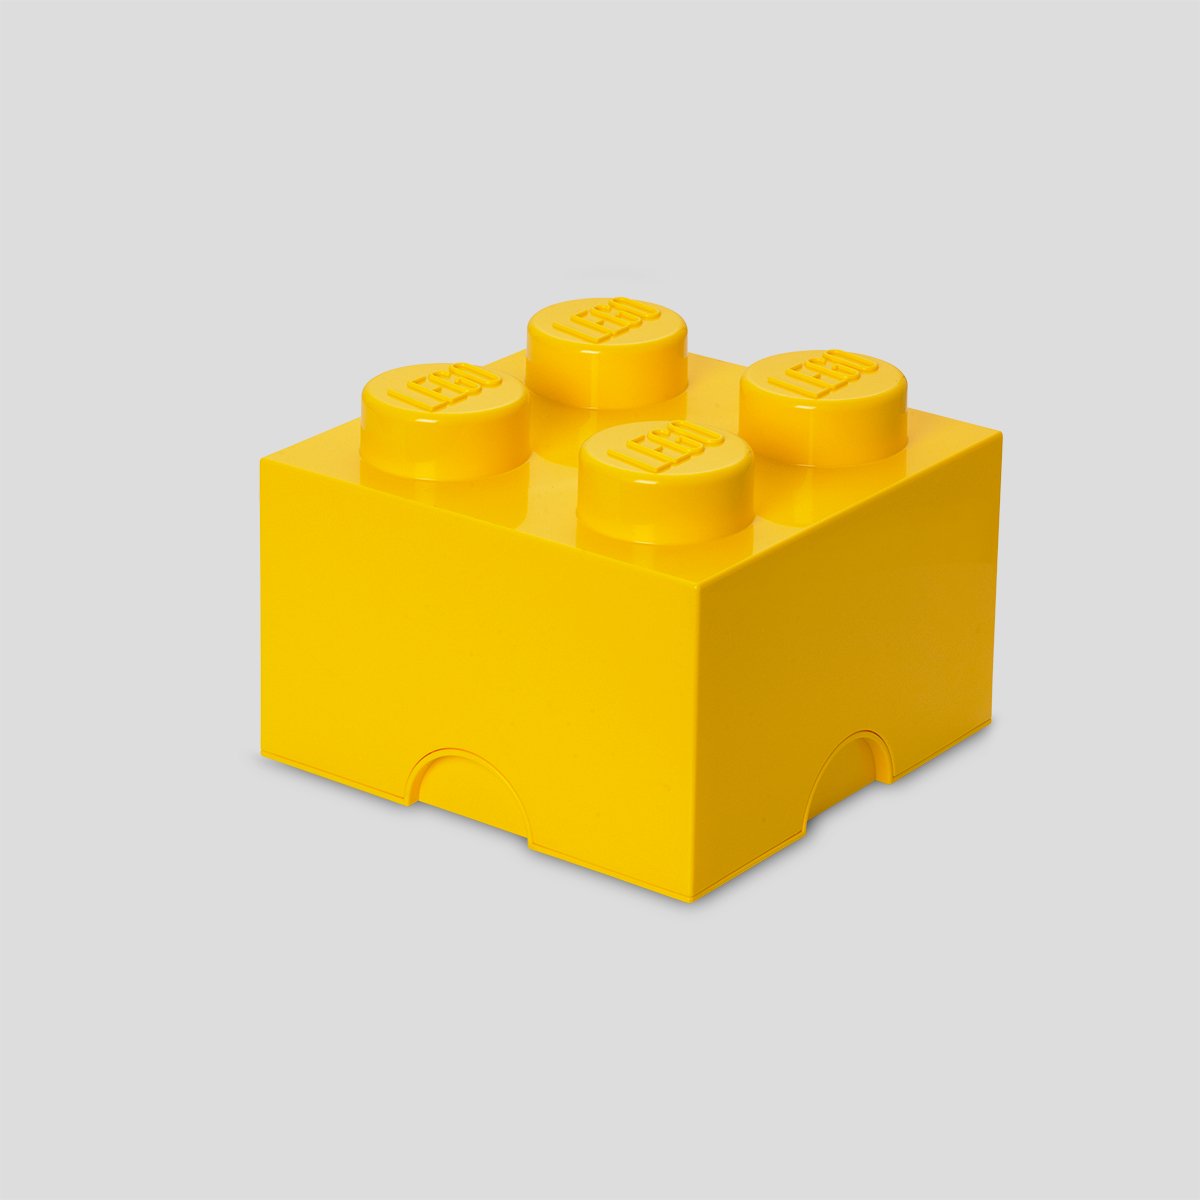 Caja XXL Lego® - Bloque de 4 - Colores clásicos - Casa de Fieras